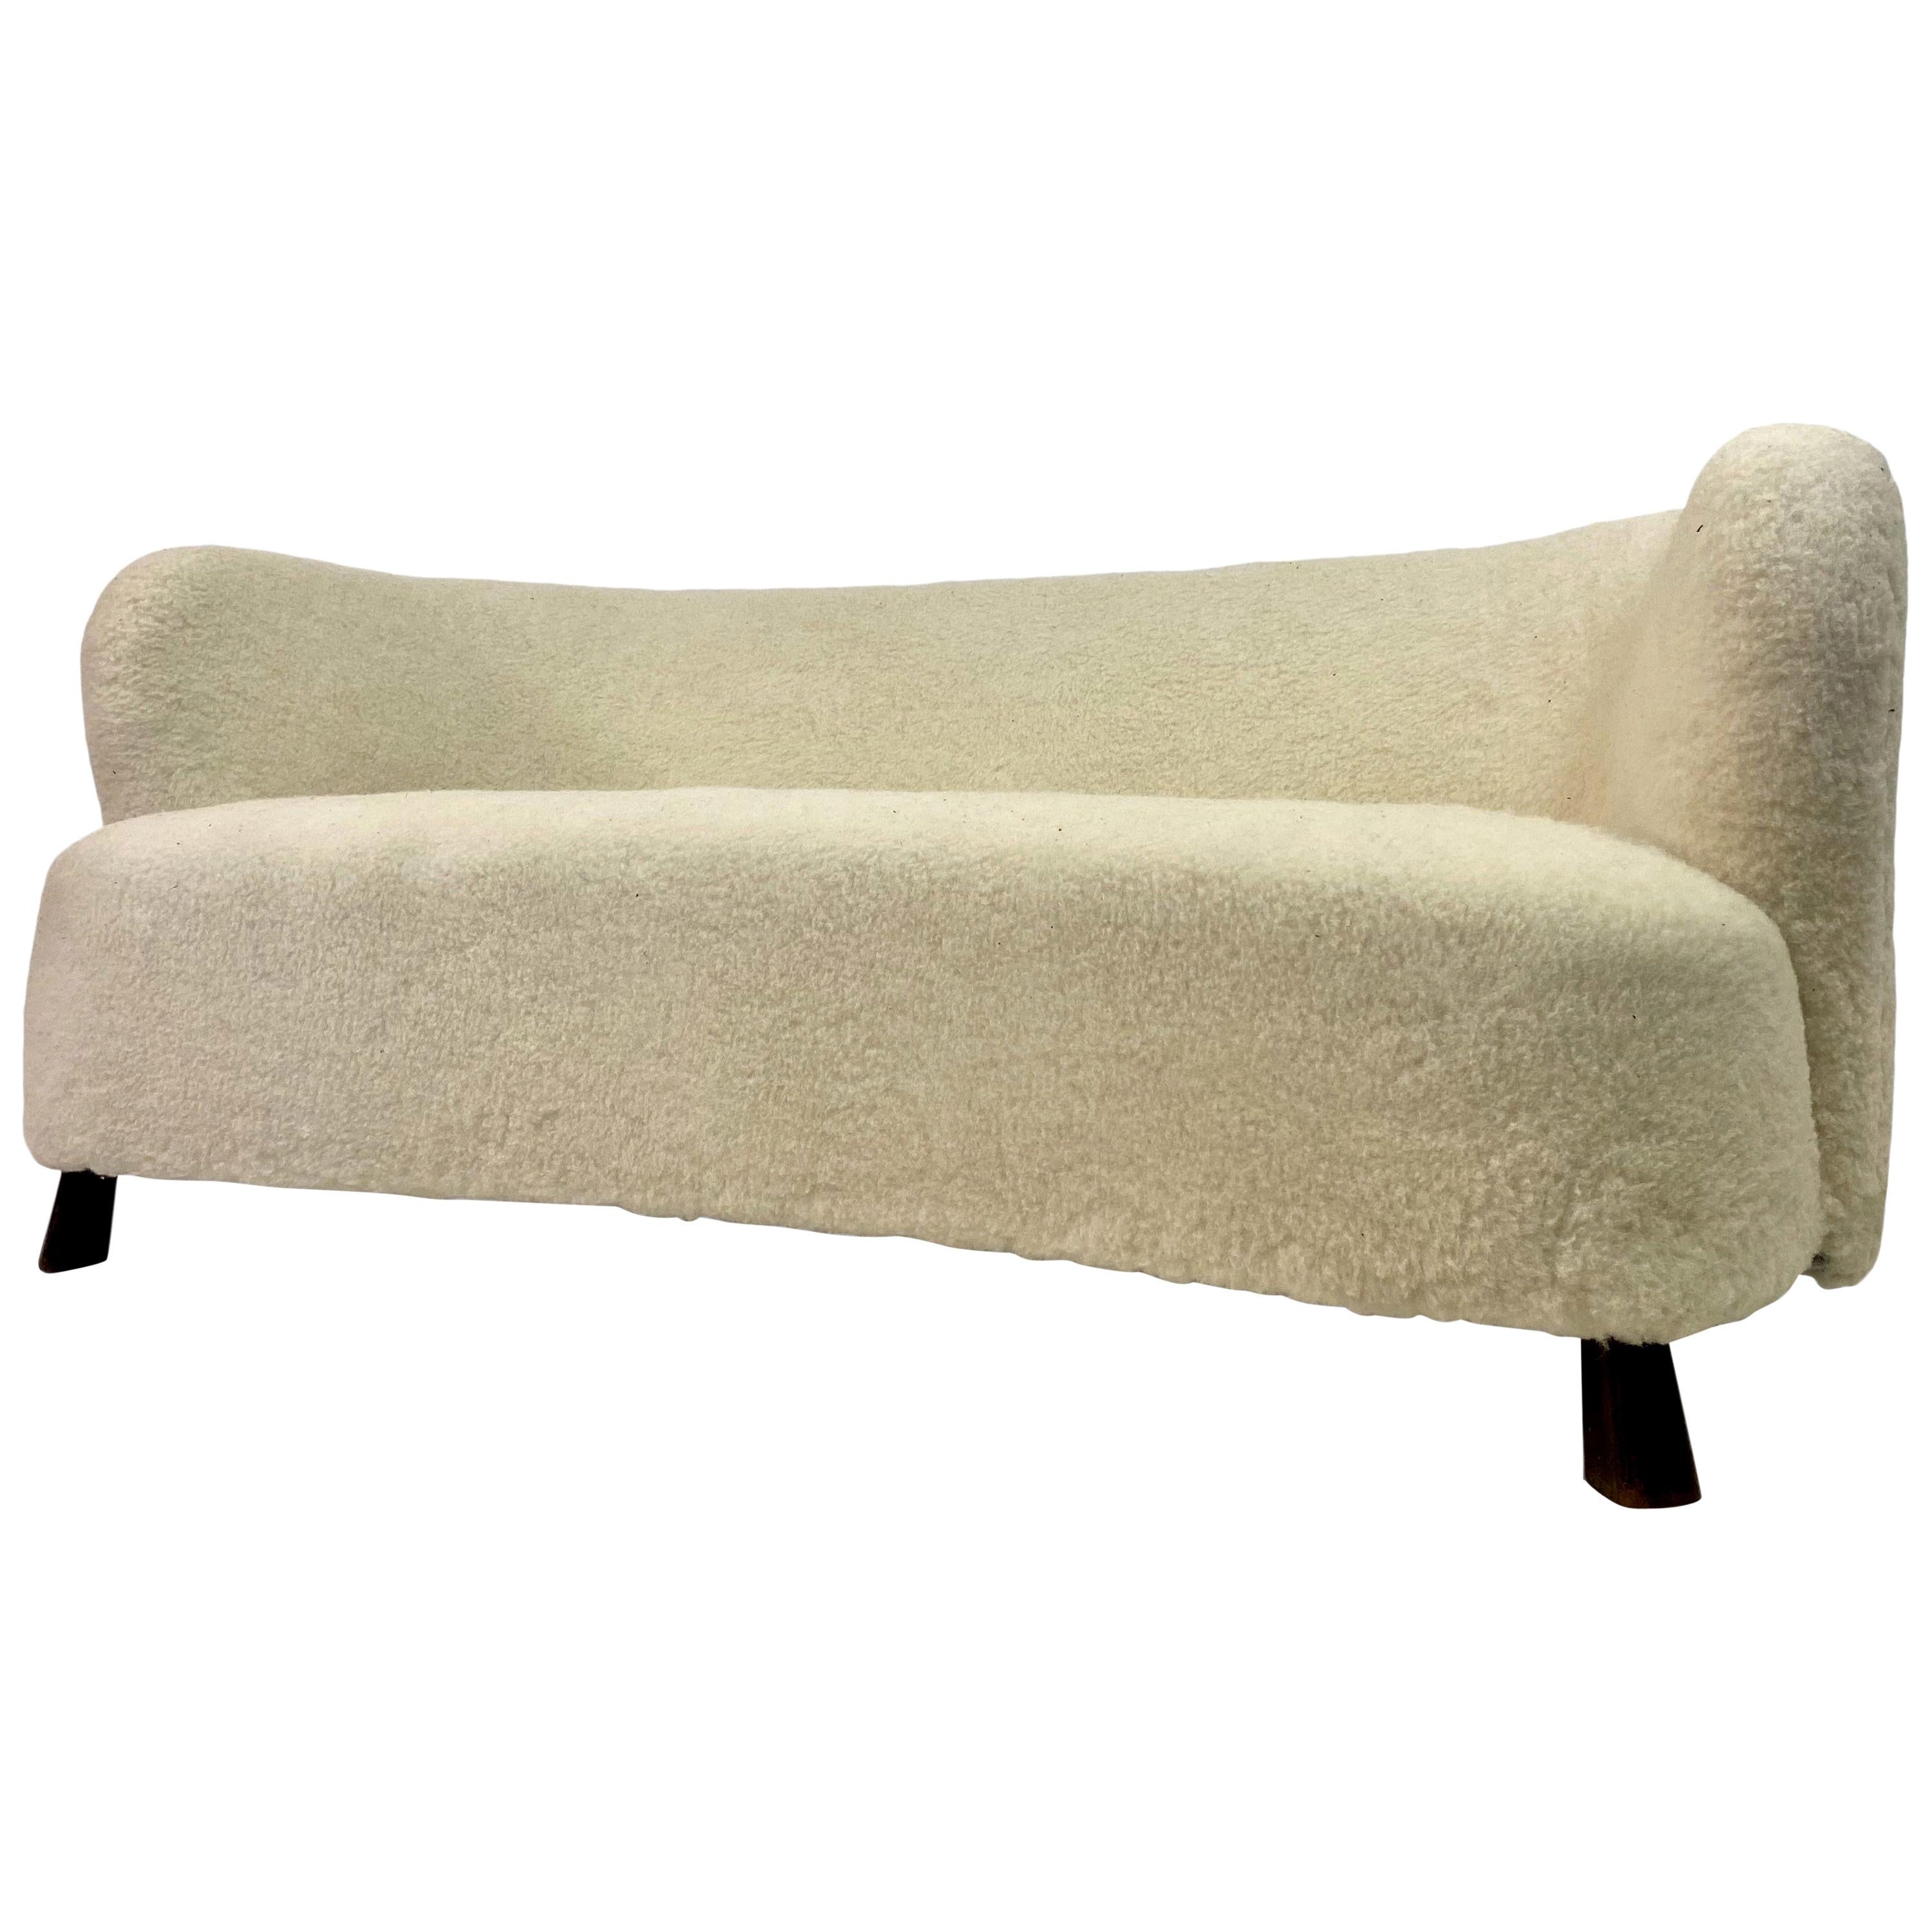 Midcentury 1940s Curved Danish Sofa in Lambs Wool